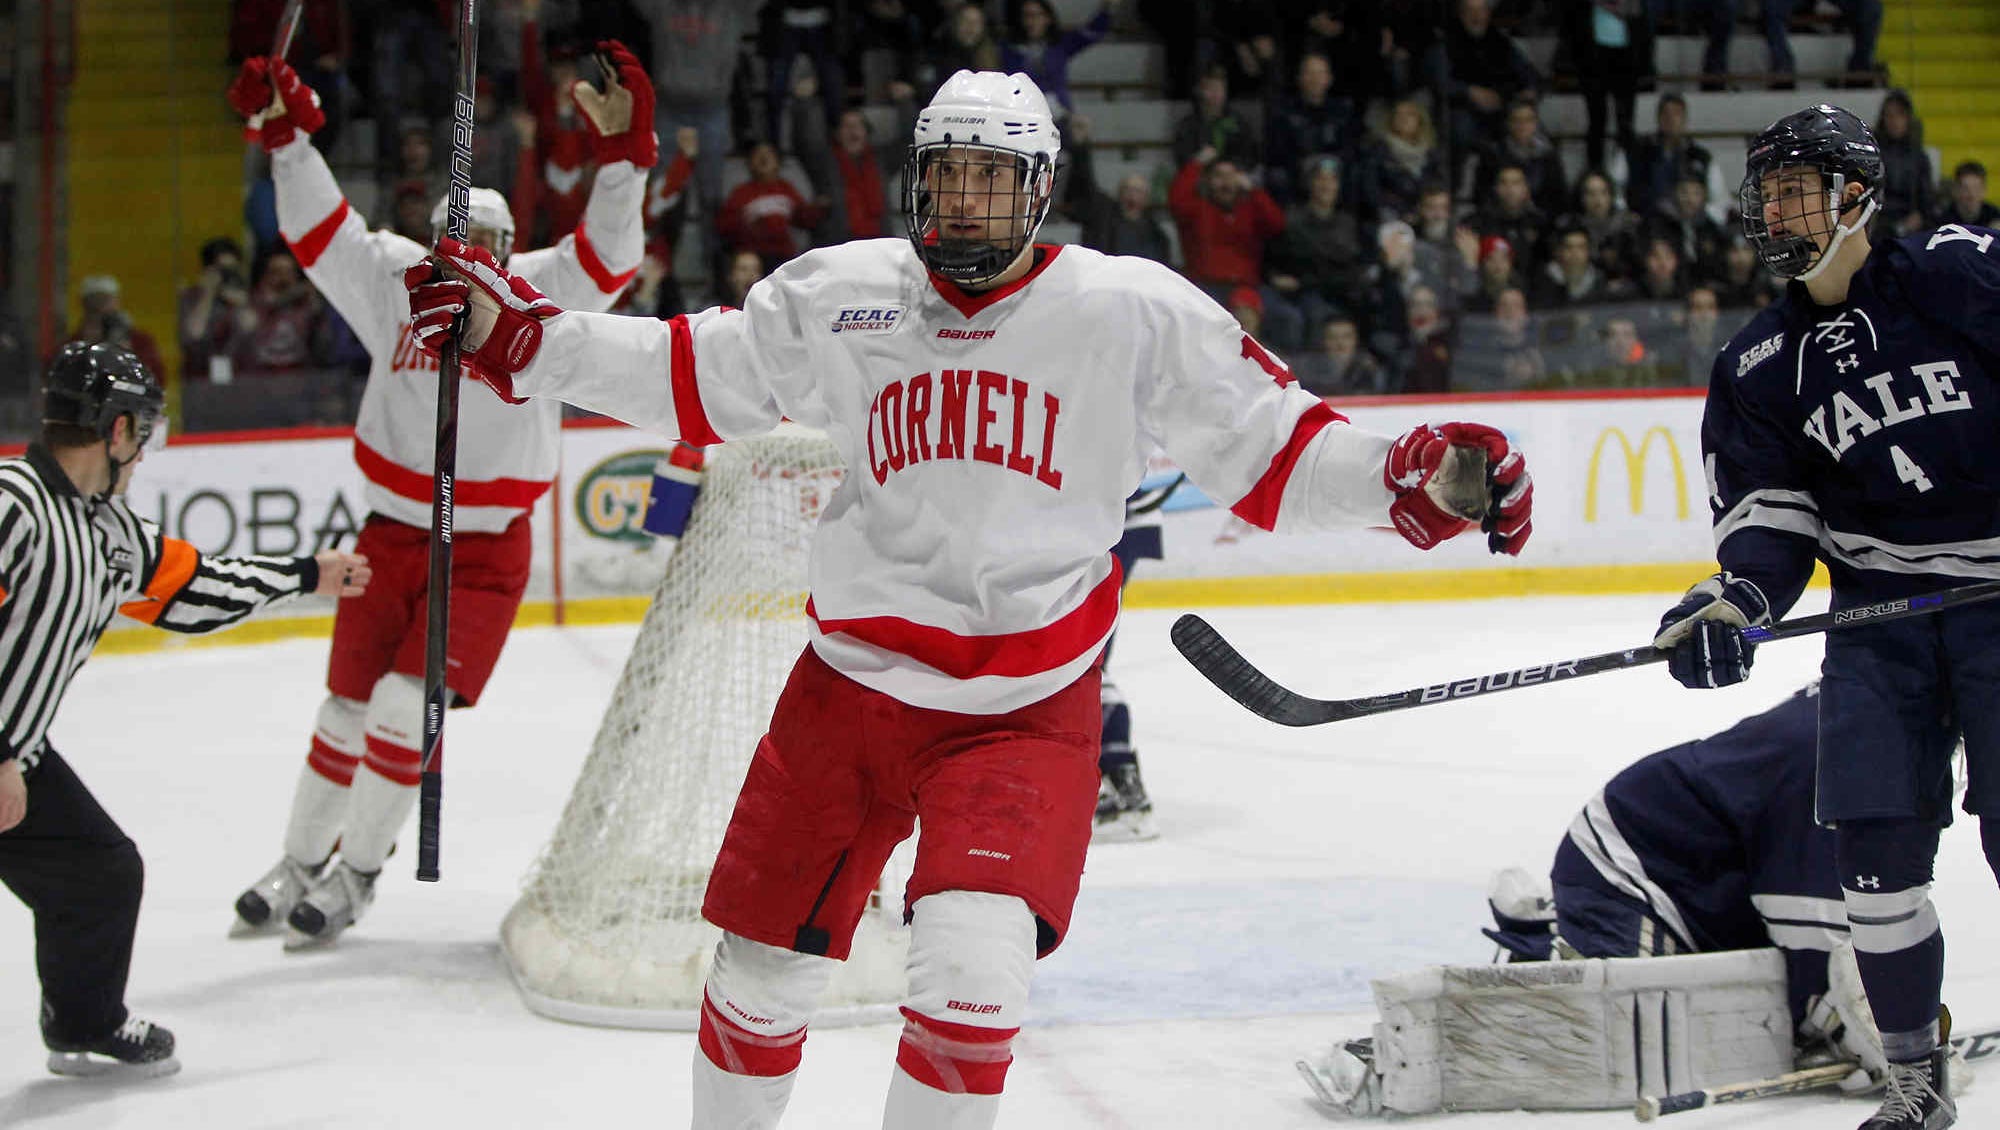 Cornell University NCAA hockey and "faithful" fans focus in new book